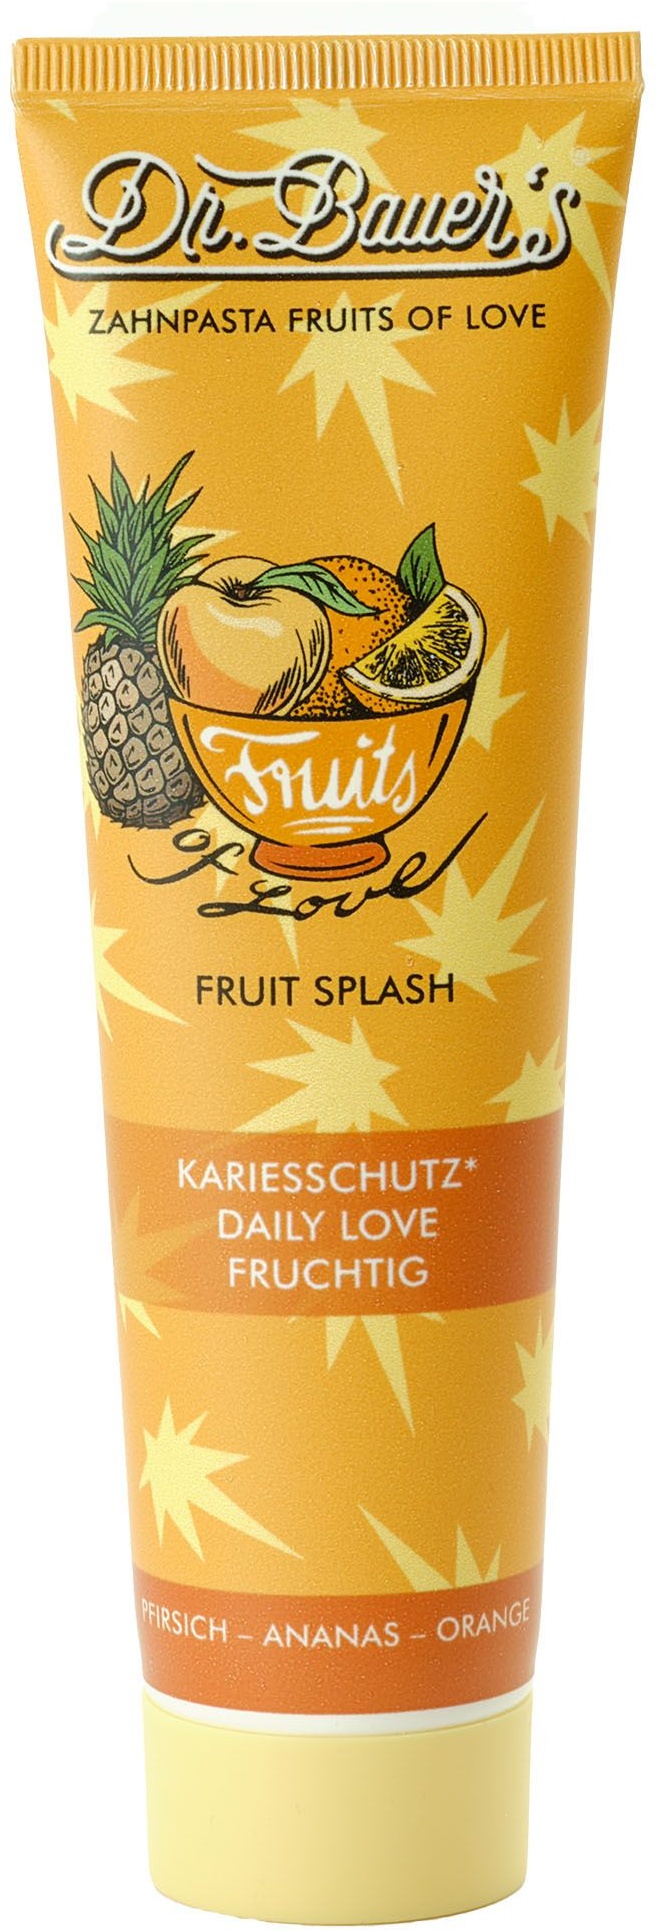 Dr. Bauer's Zahnpasta Fruits of Love Fruit Splash 90 ml